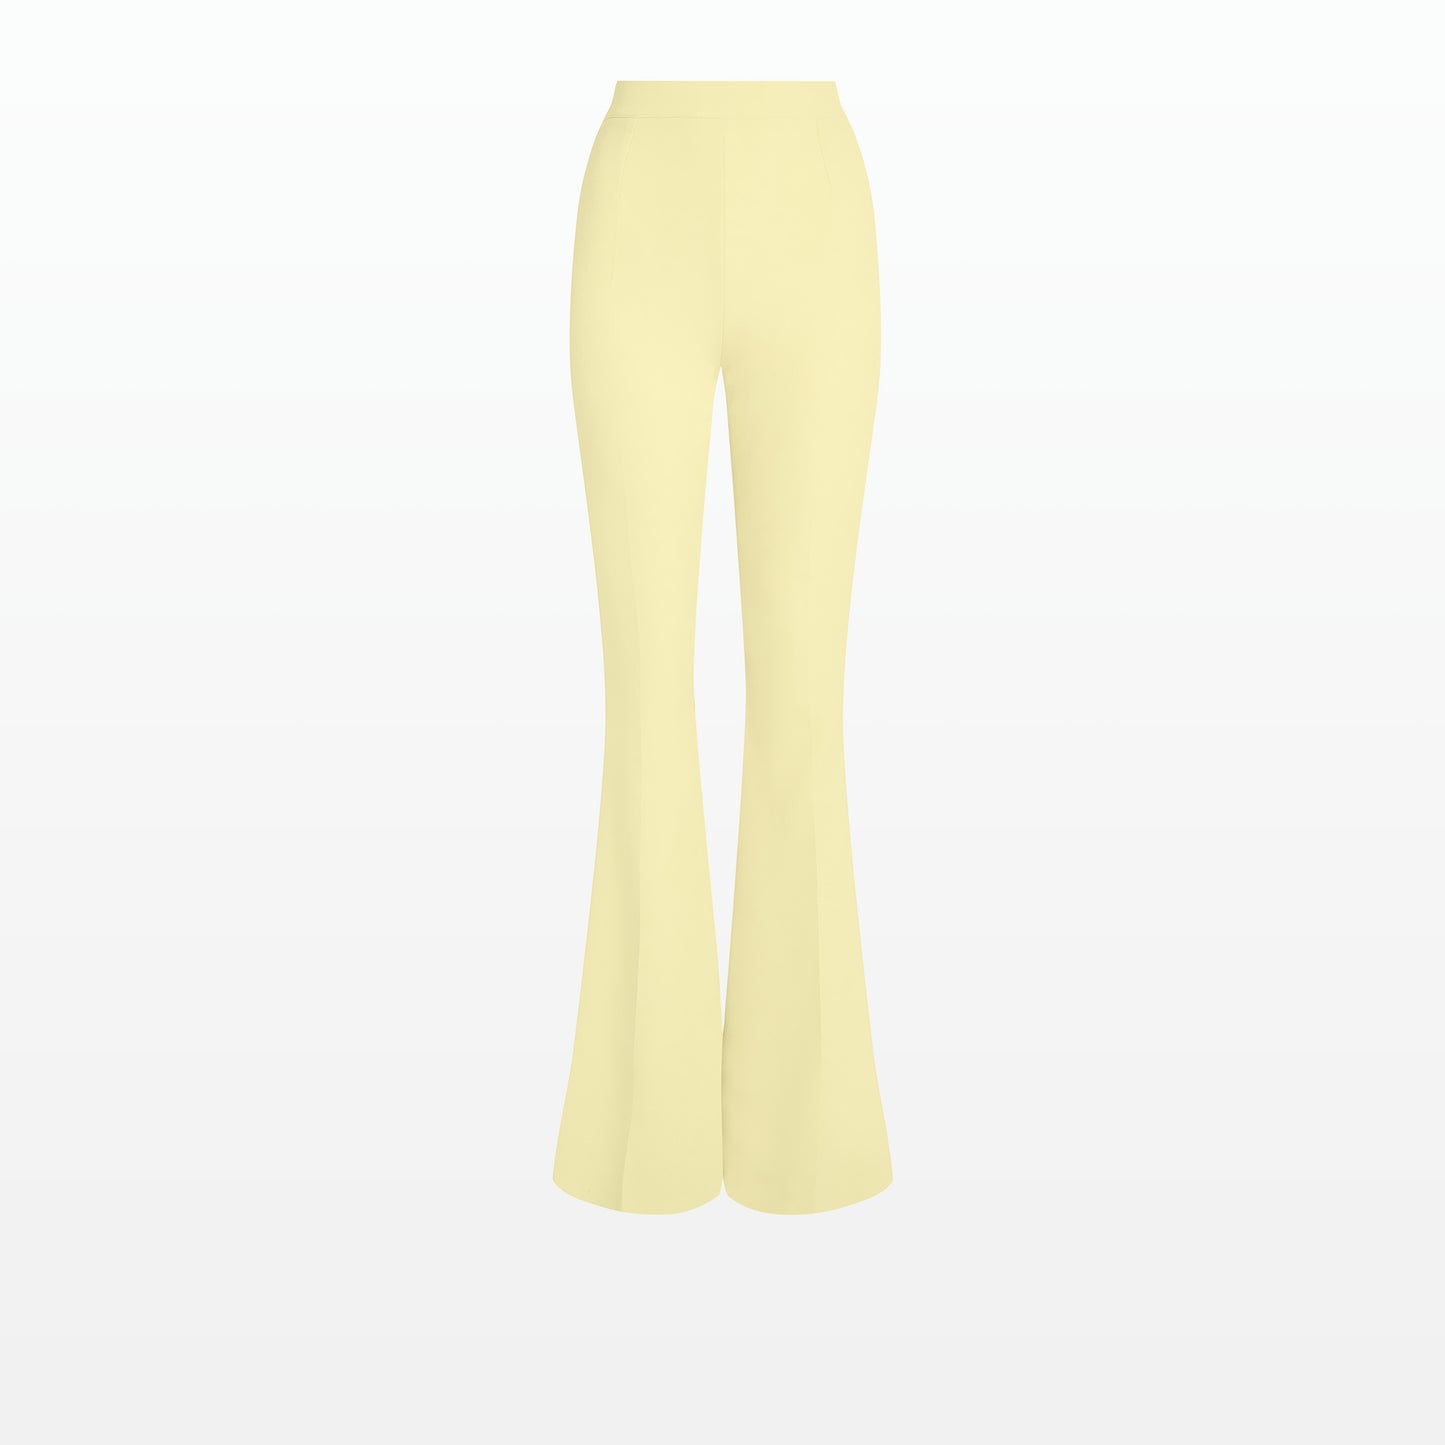 Halluana Pale Yellow Trousers